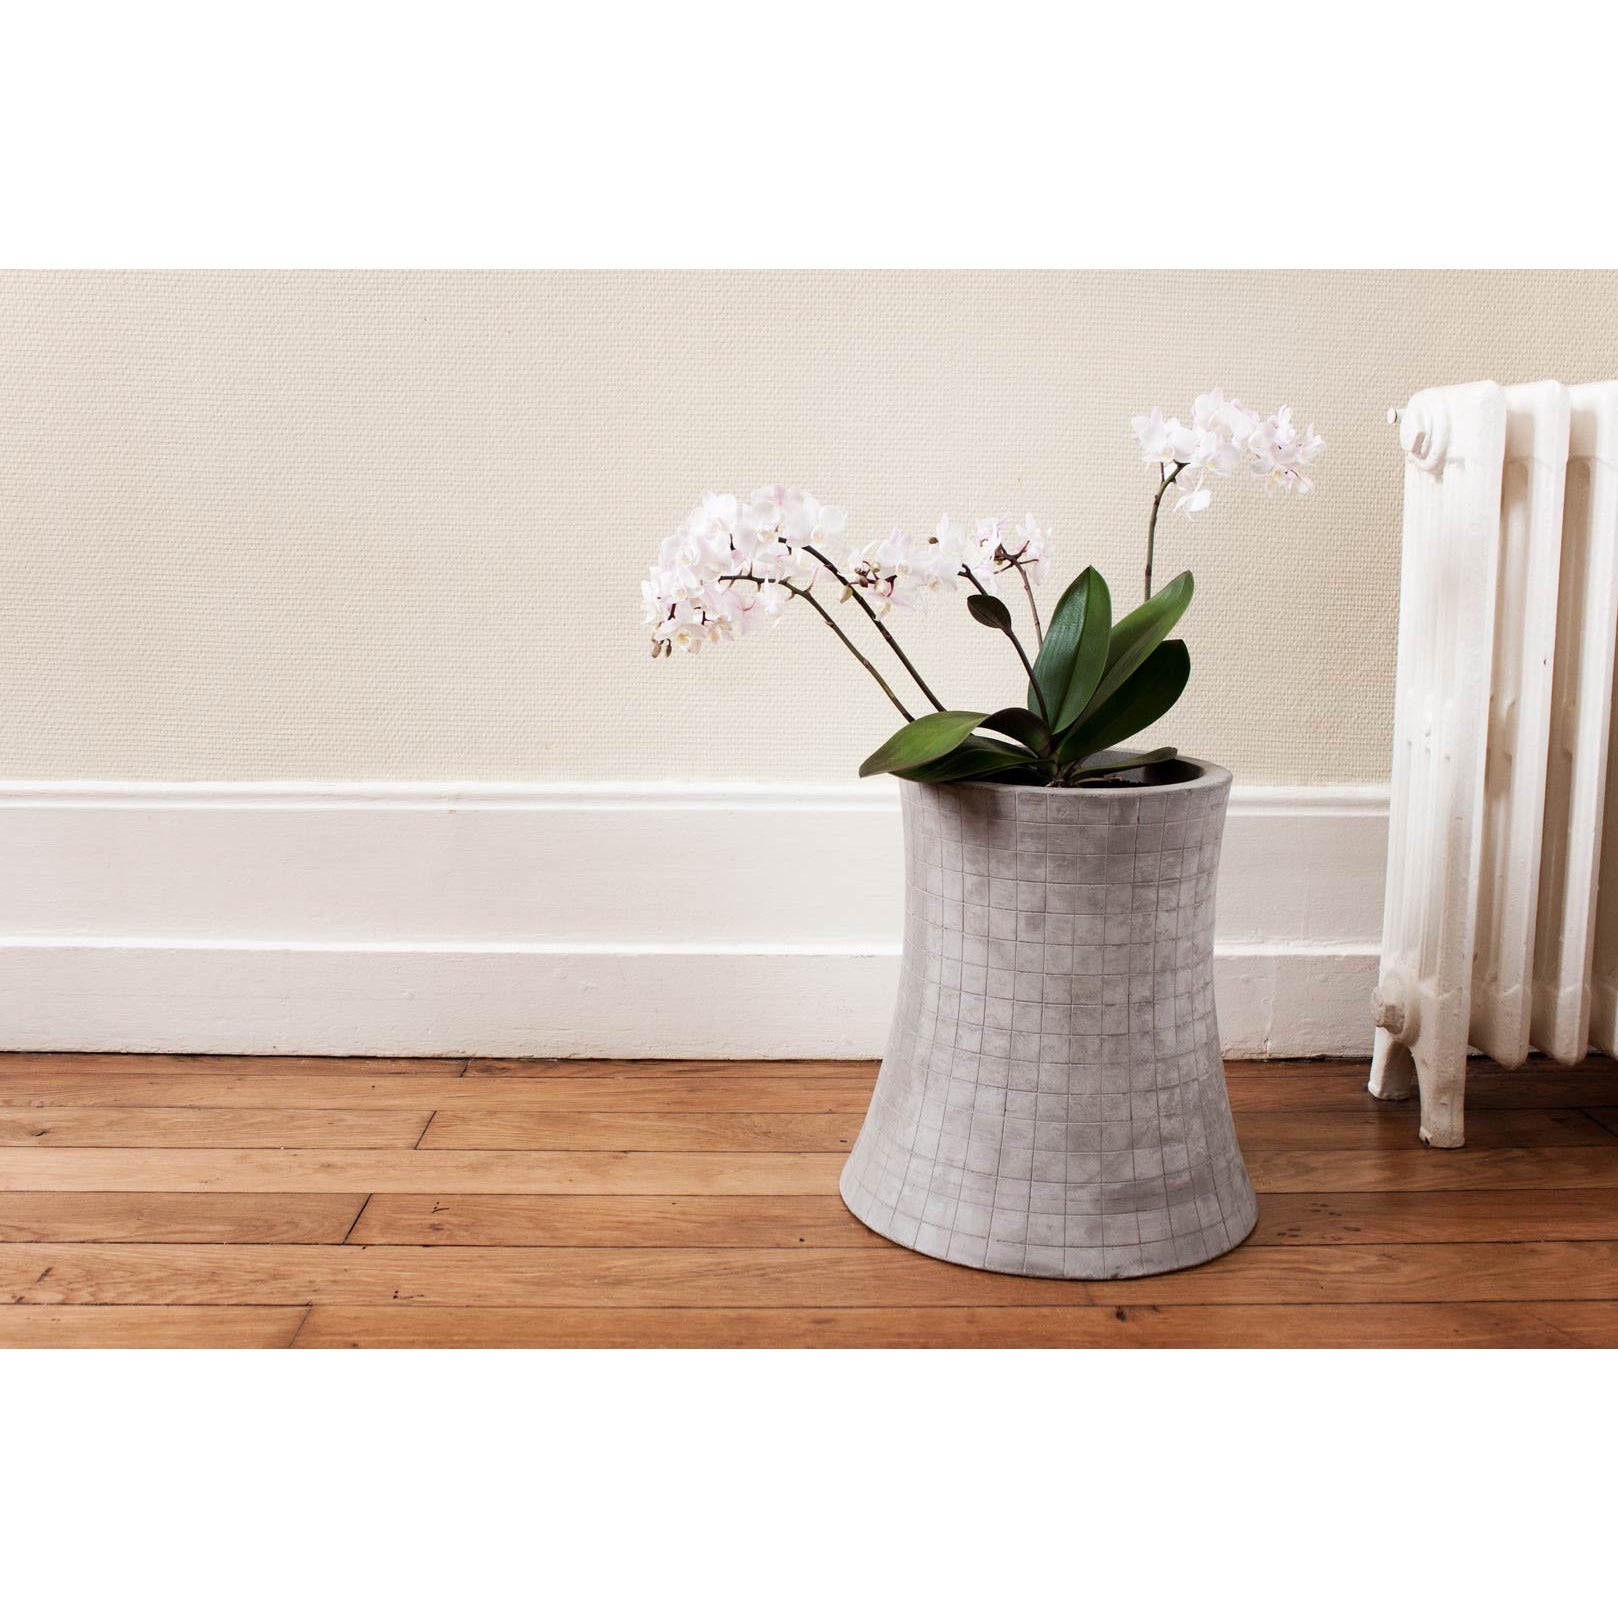 Lyon Beton Nuclear Plant Flower Pot made from Concrete | Modern Furniture + Decor